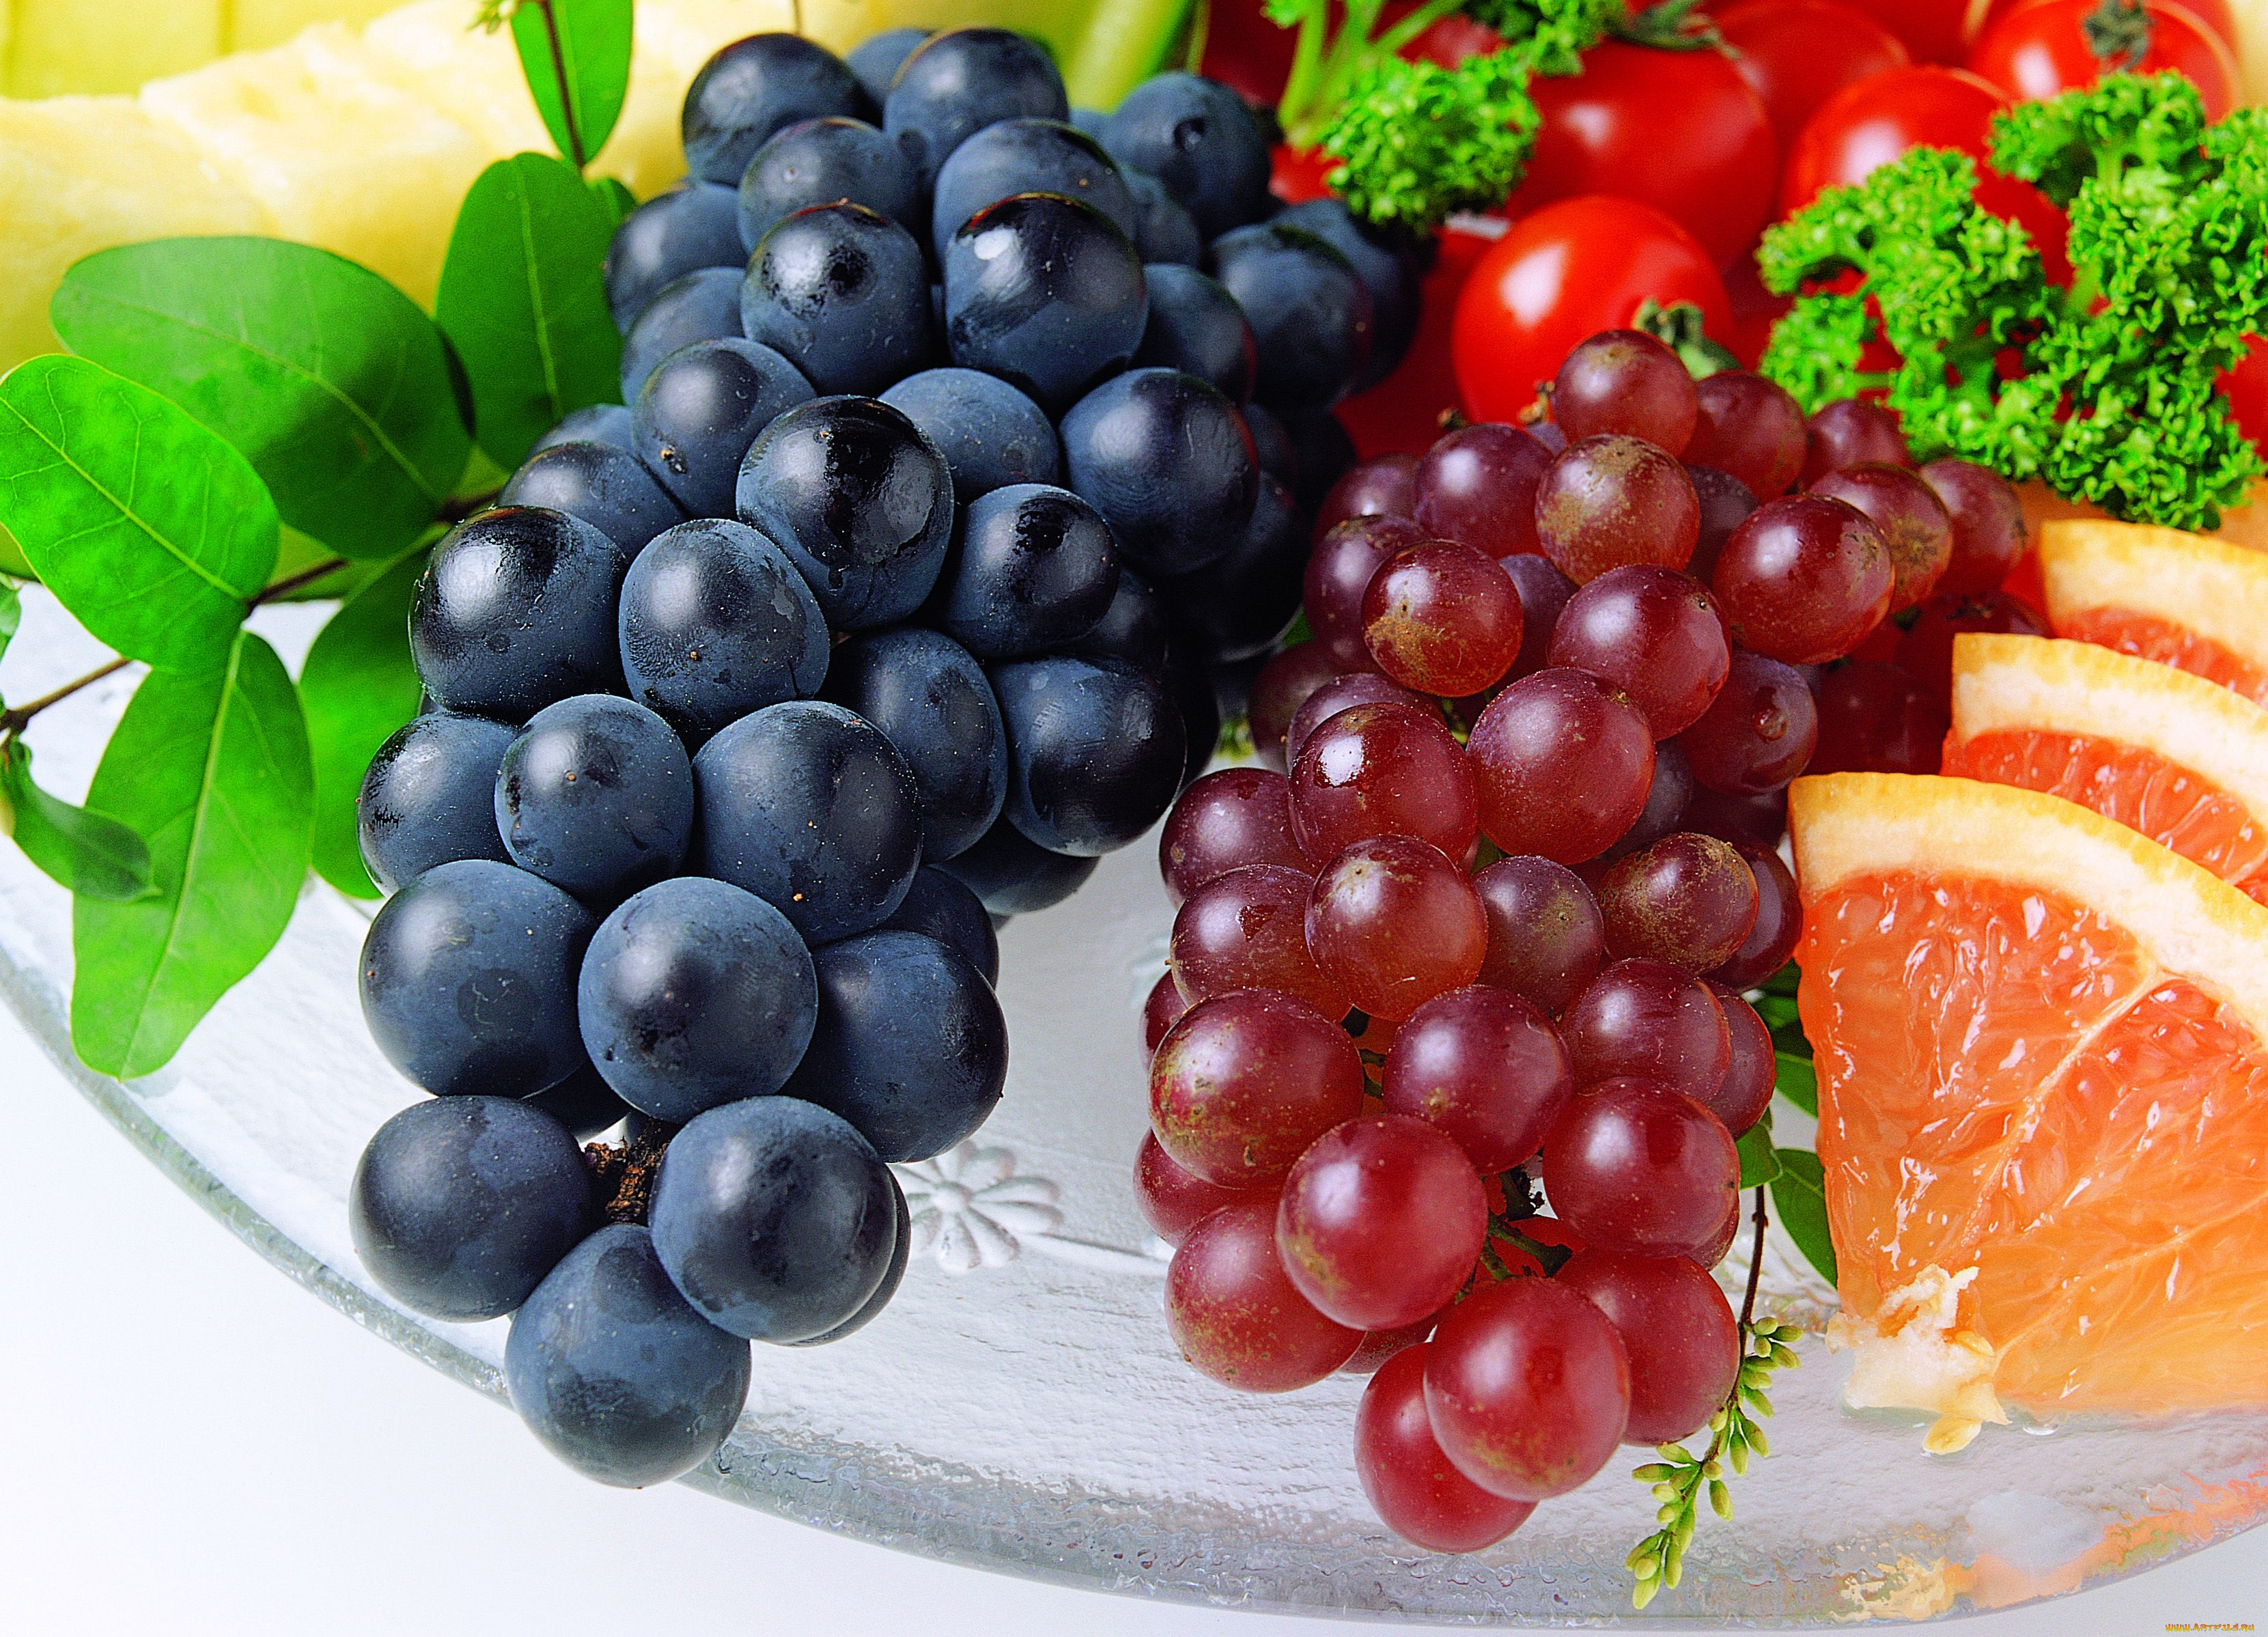 еда, фрукты, овощи, вместе, виноград, грейпфрут, помидоры